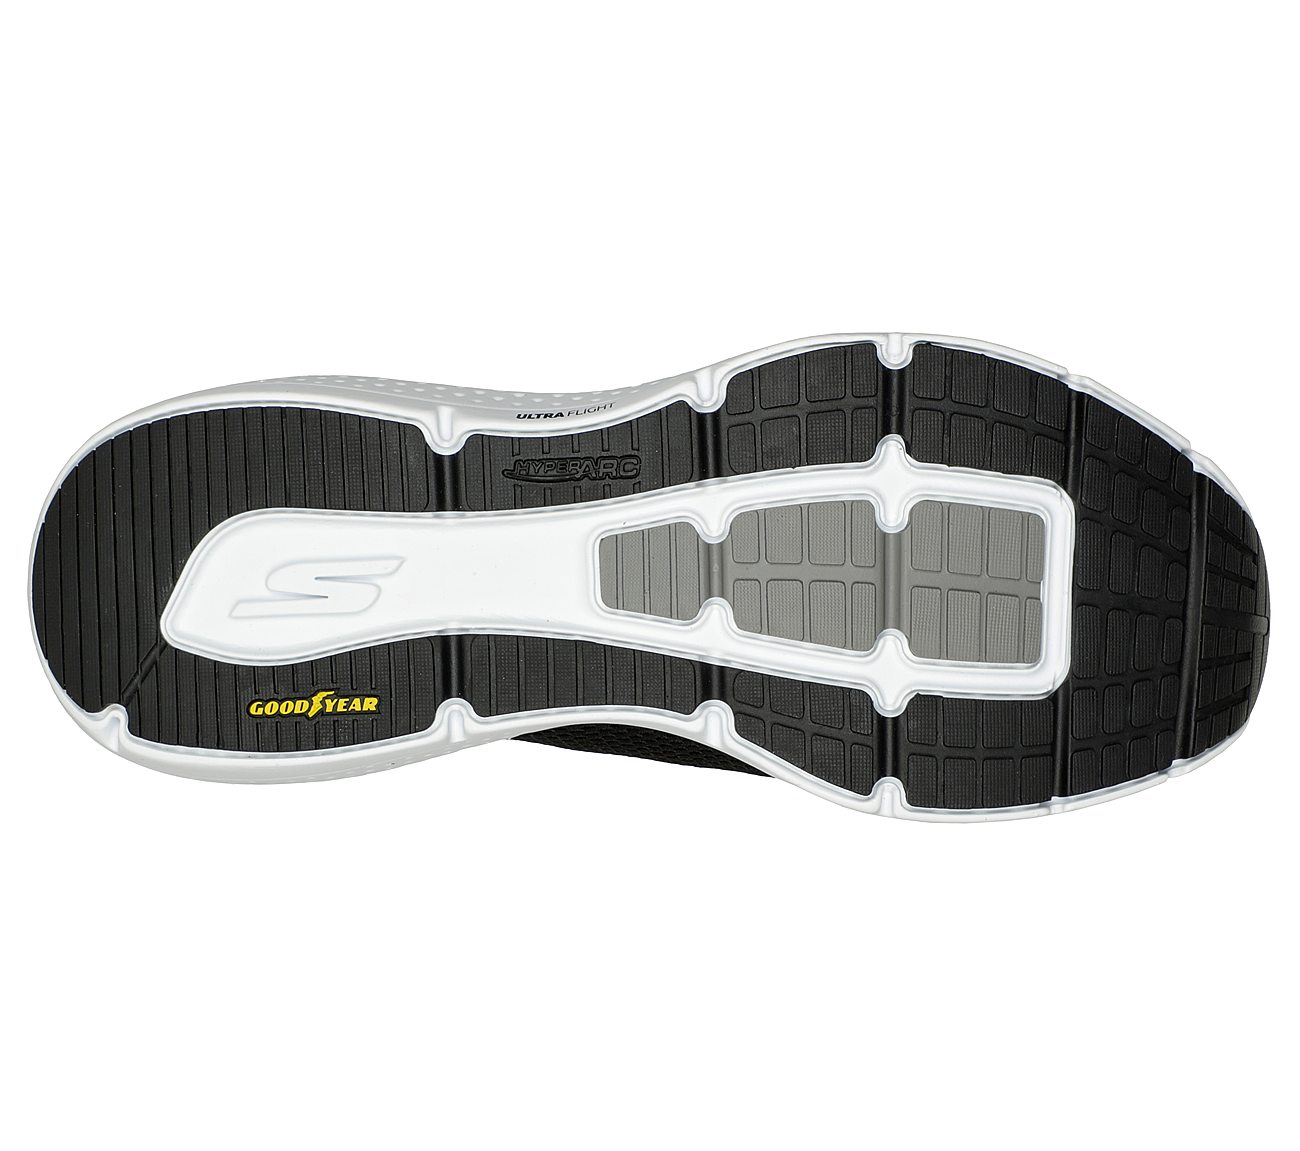 GO RUN SUPERSONIC - APEX, BLACK/WHITE Footwear Bottom View